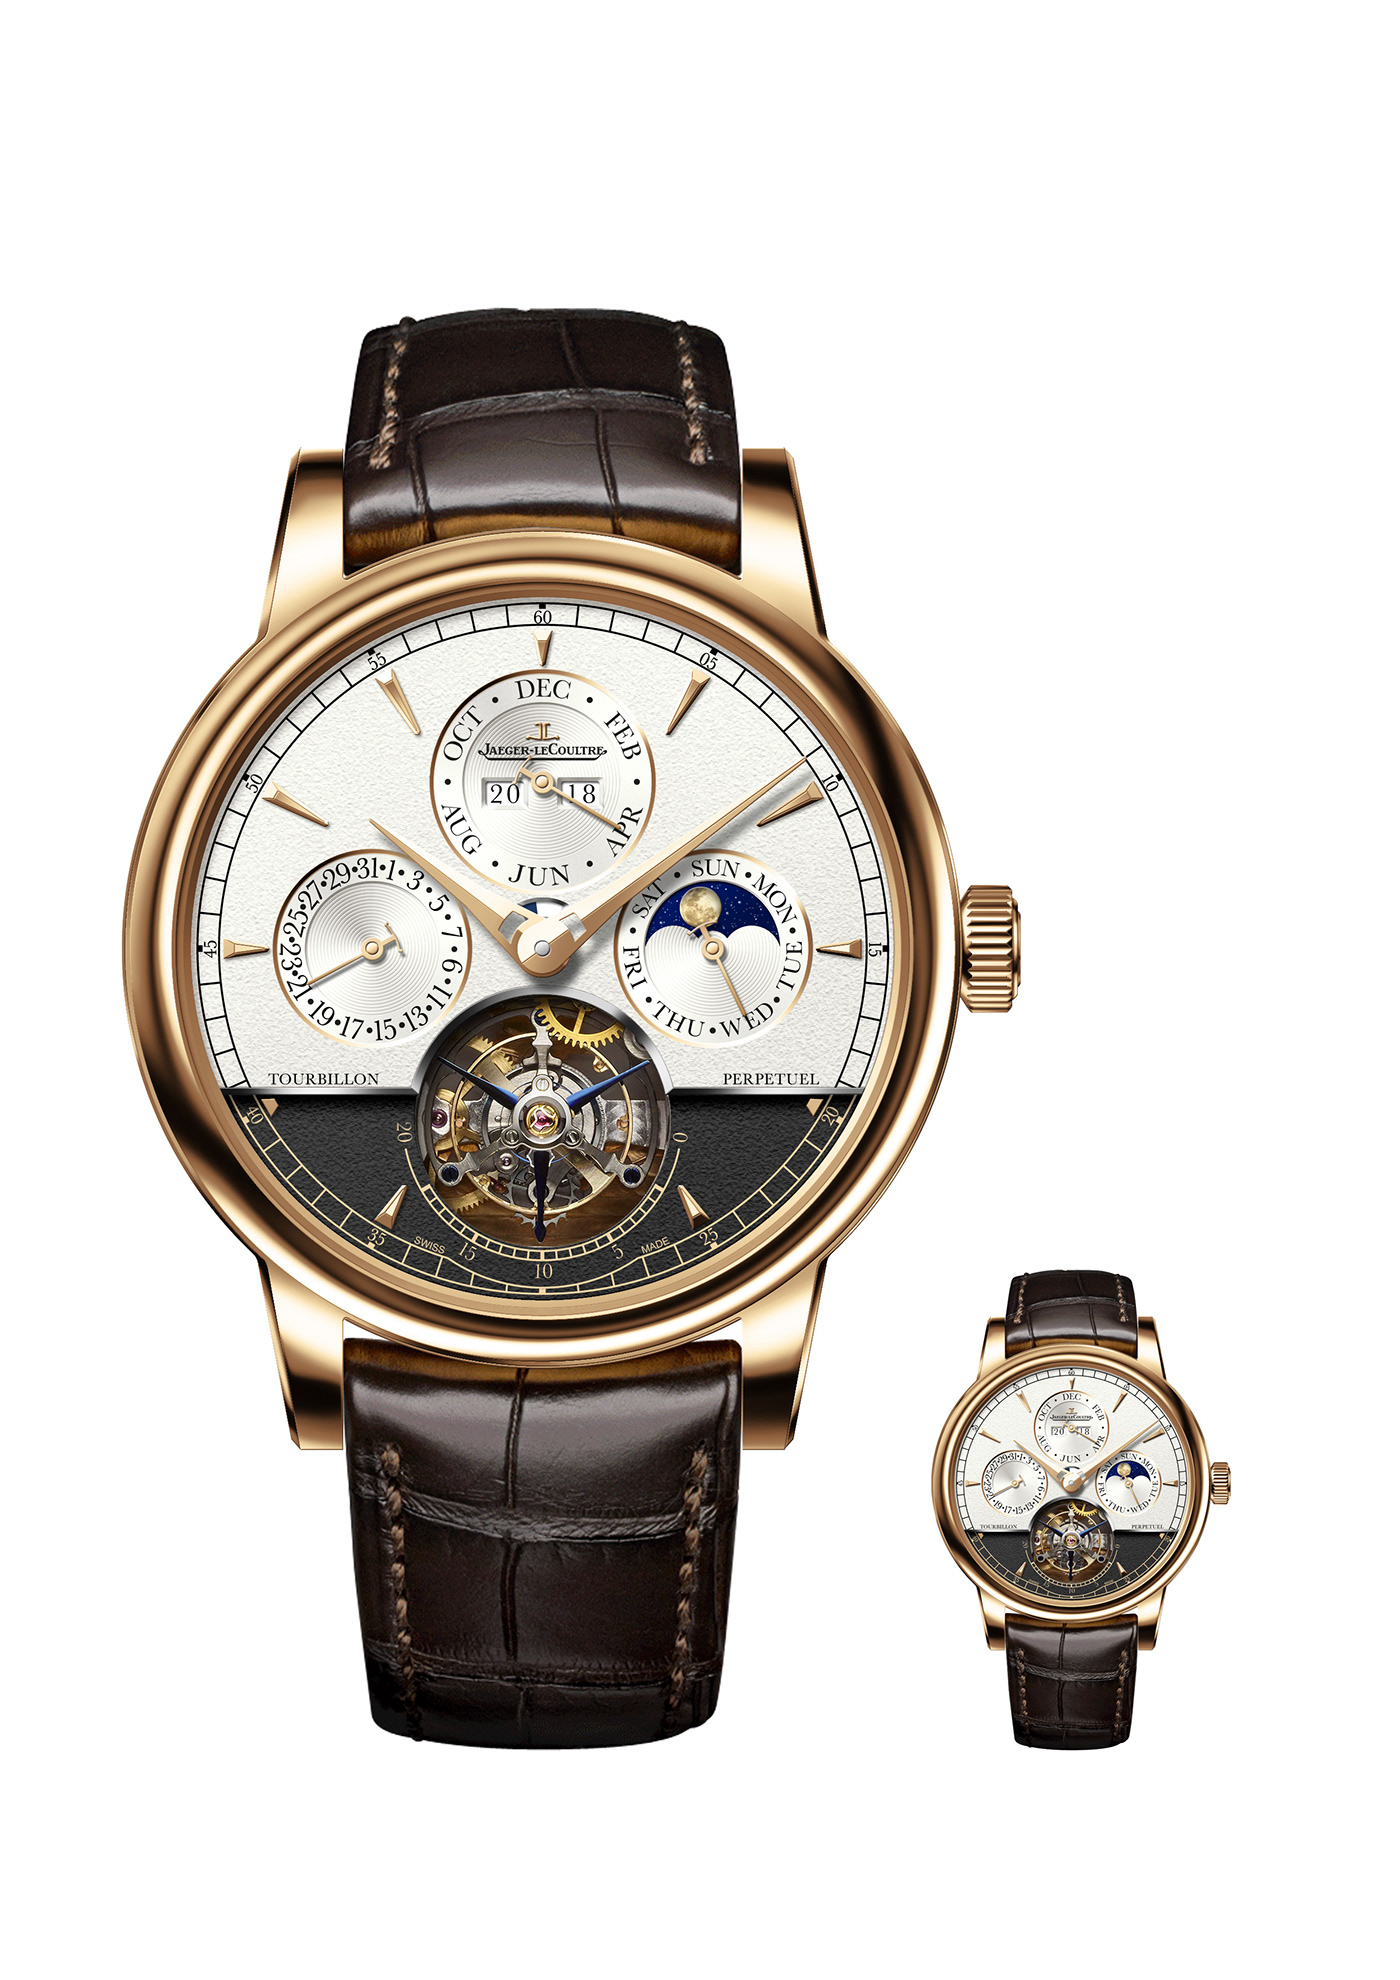 Watches watch luxury watch design horology timepiece horlogerie luxe montre